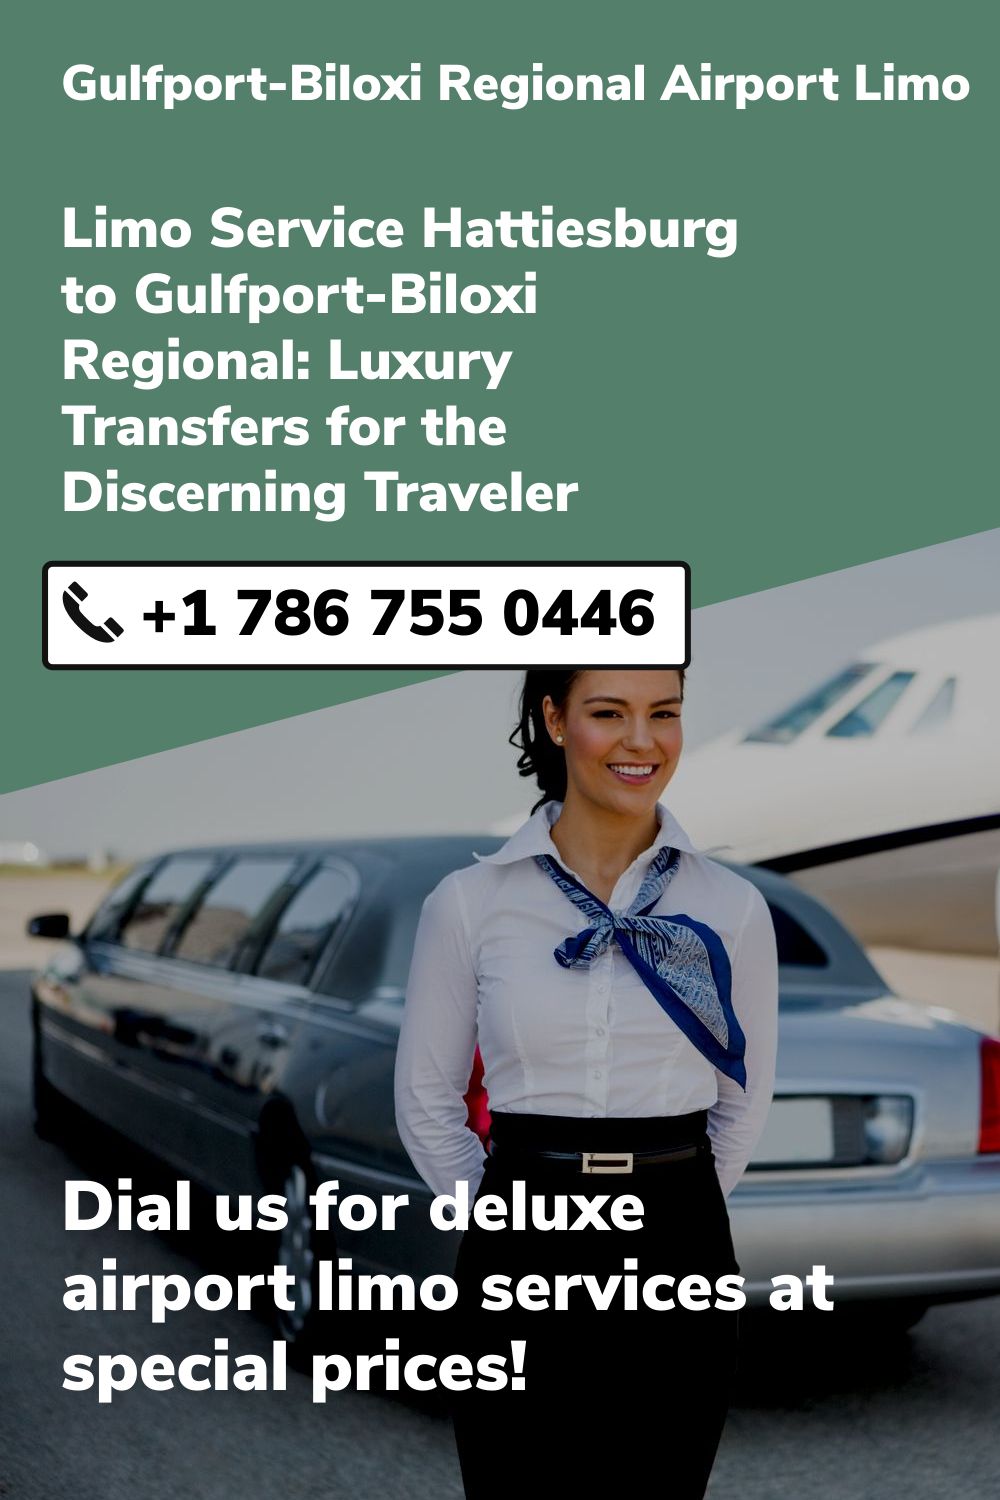 Gulfport-Biloxi Regional Airport Limo